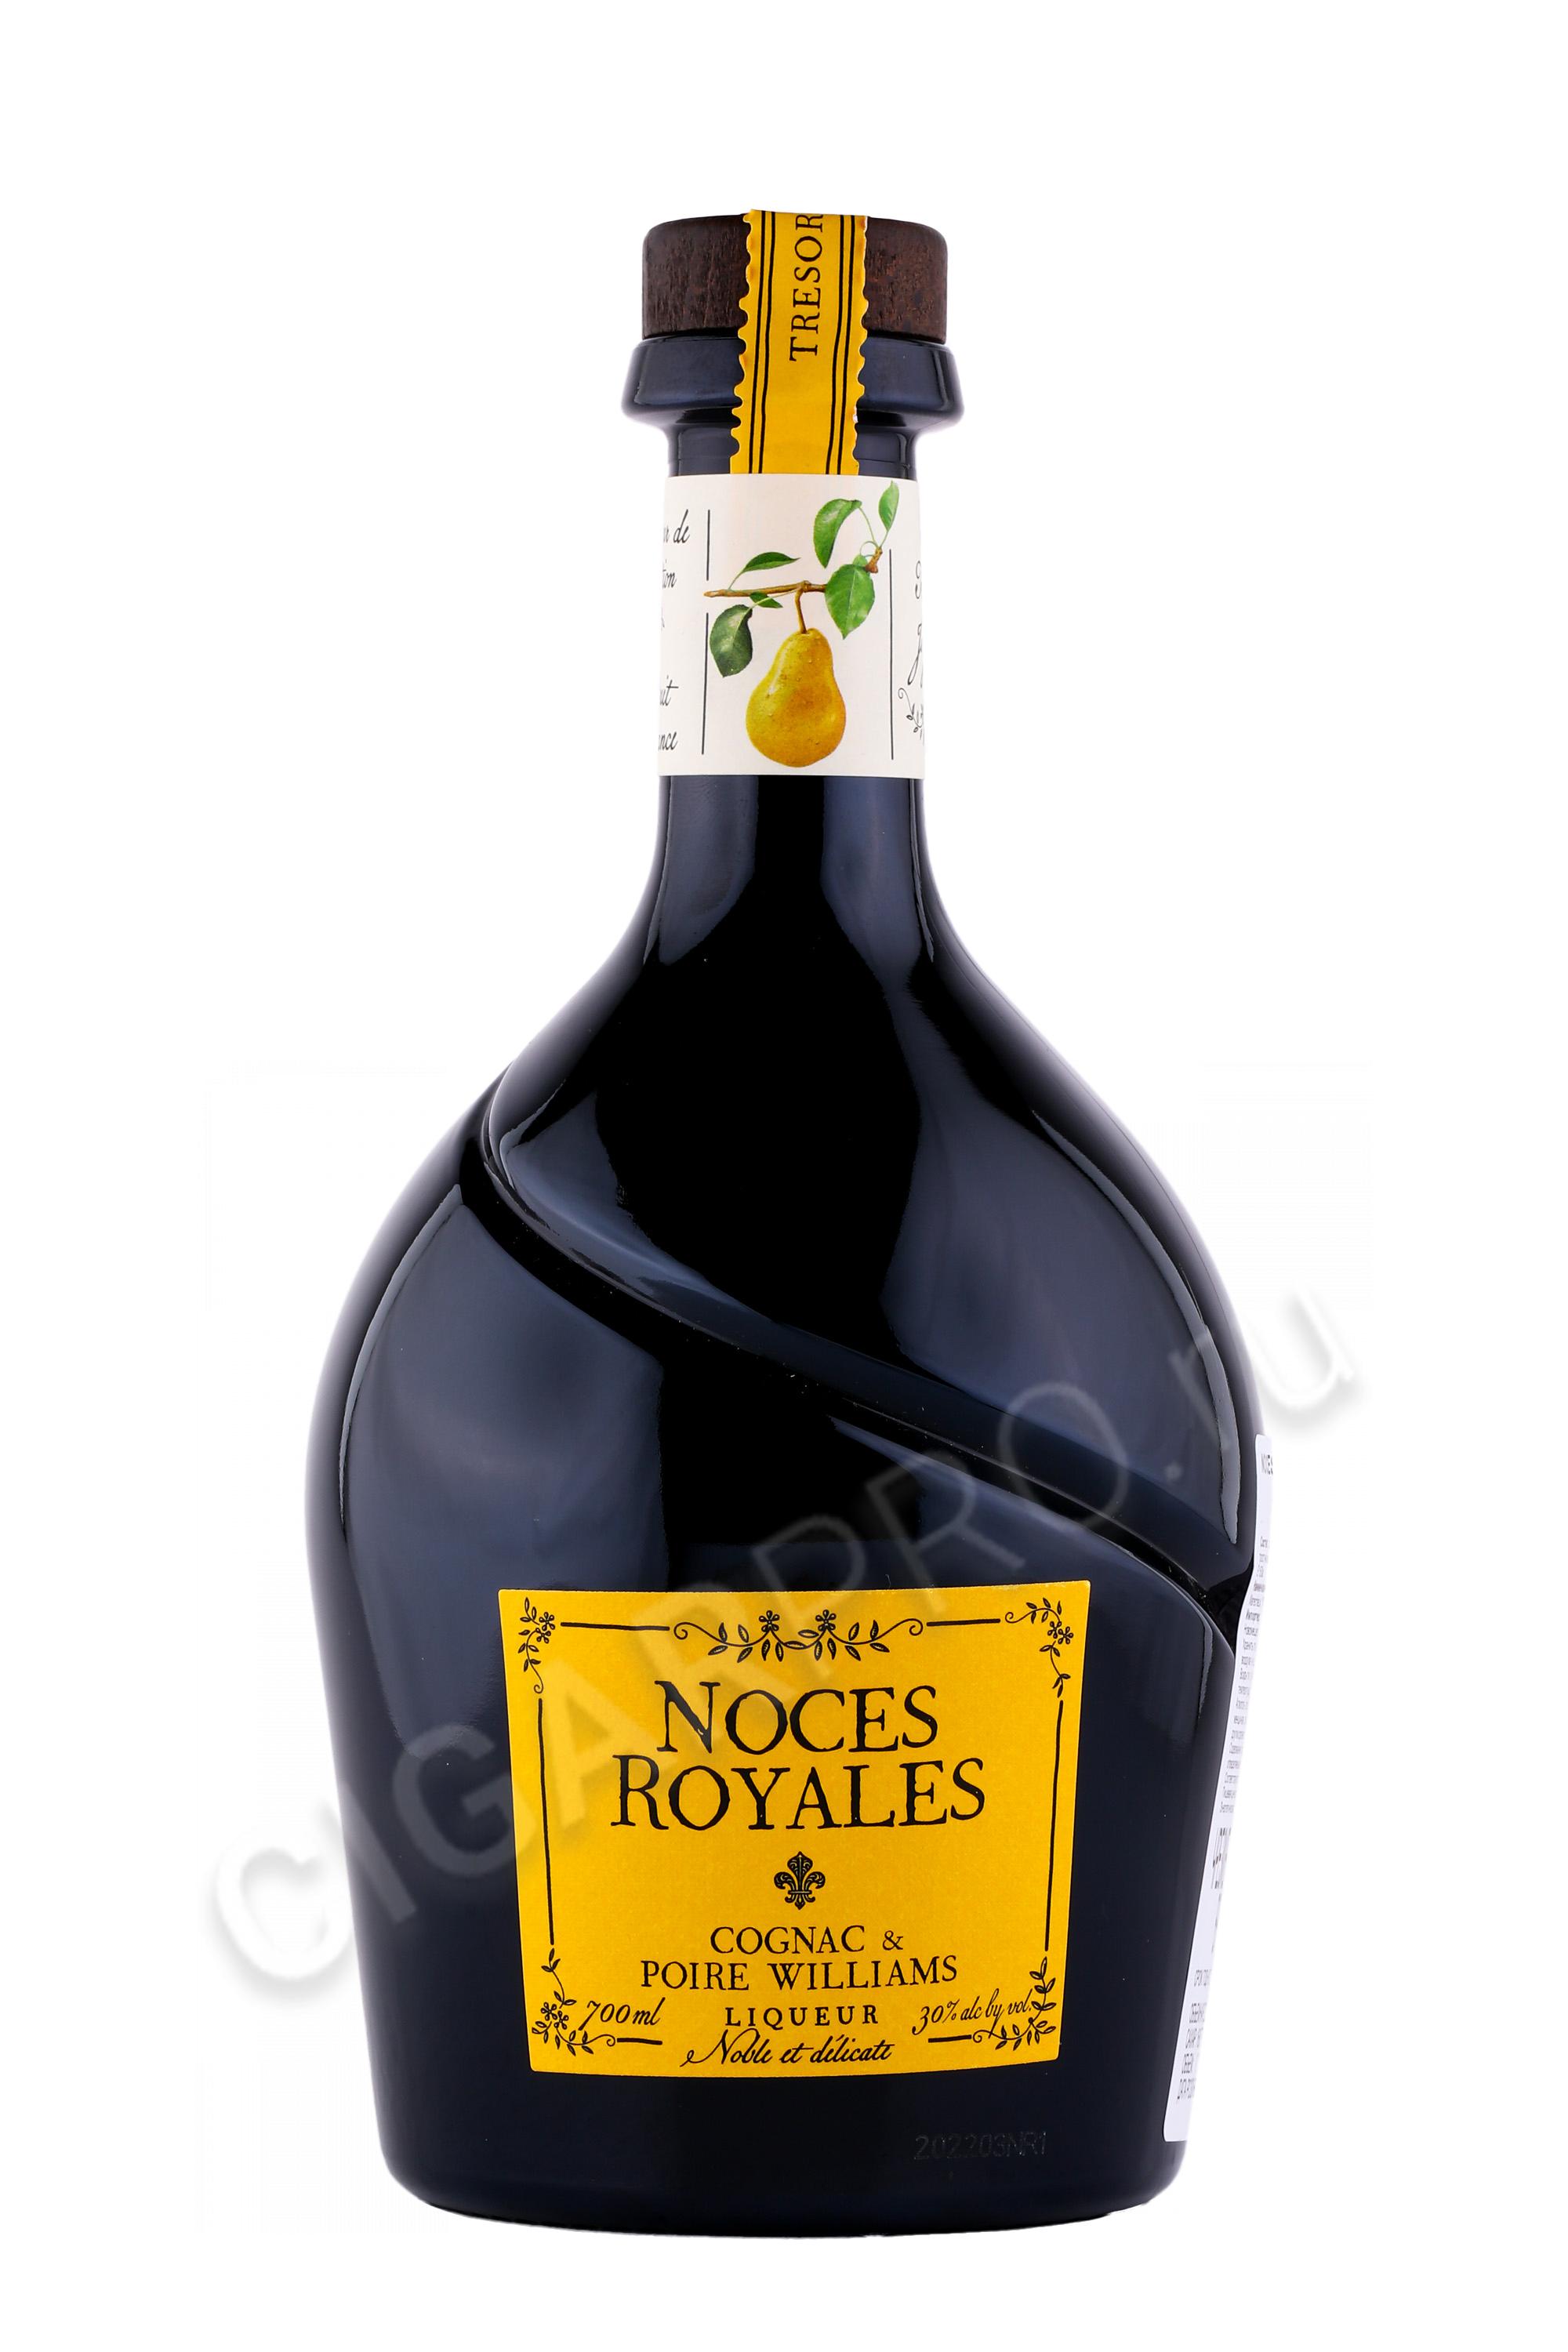 0.7 Noces Нос Ликер и Royales купить цена Williams Груша Cognac Liqueur, л Коньяк Poire Вильямс Рояль - ликер